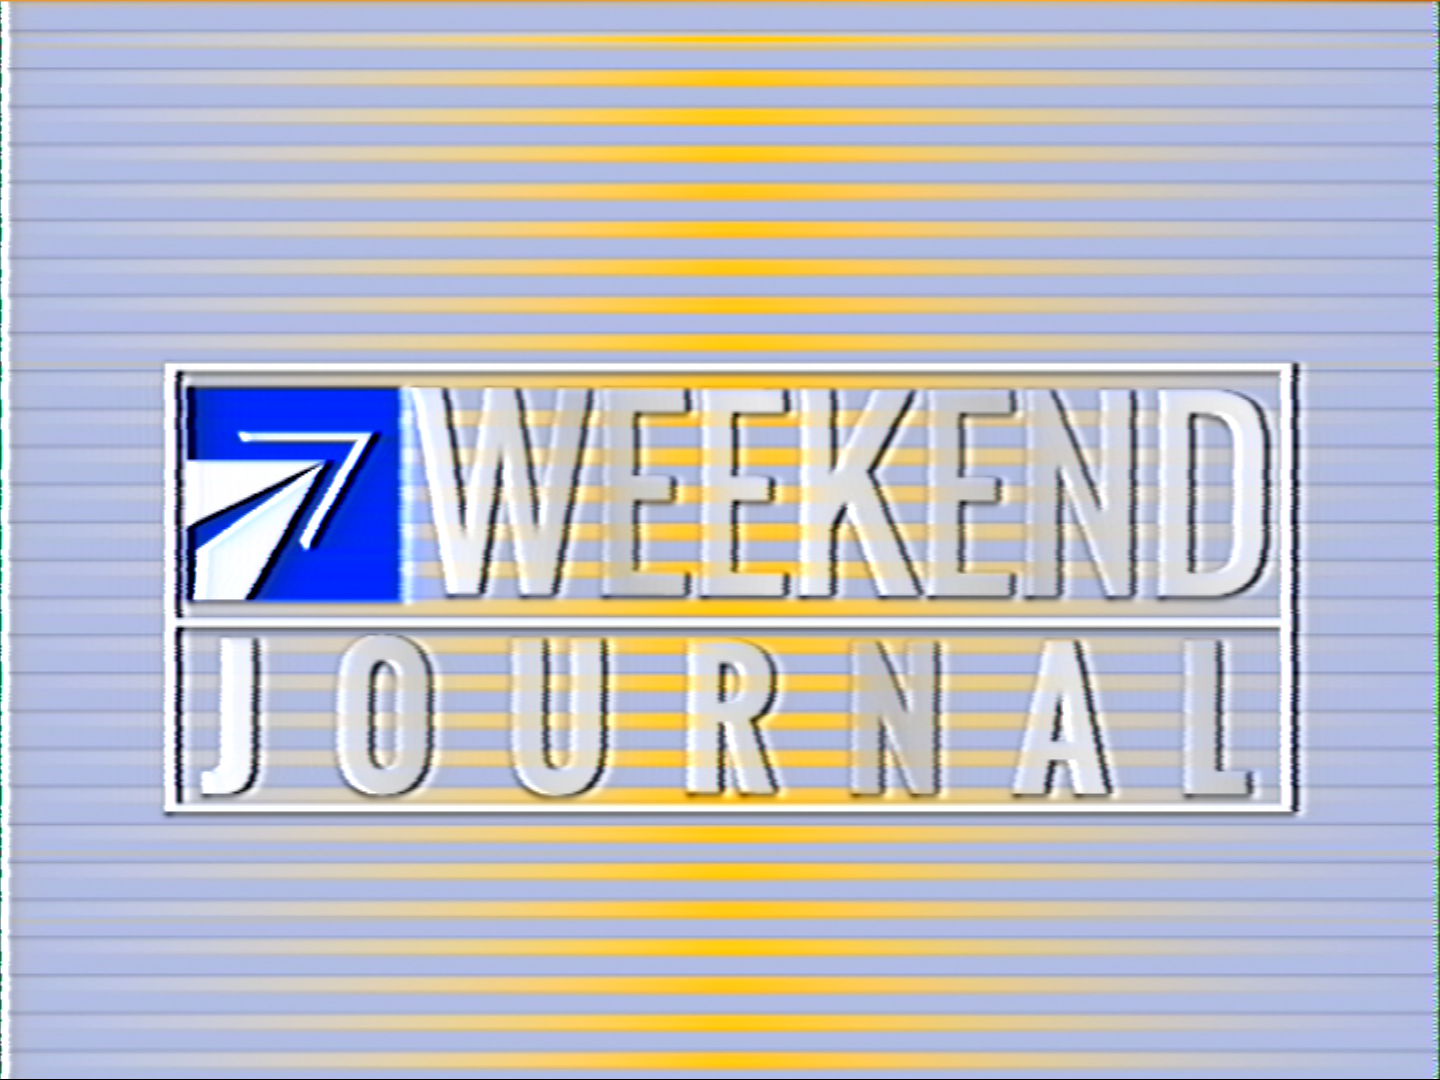 ABC Weekend Journal (1986)